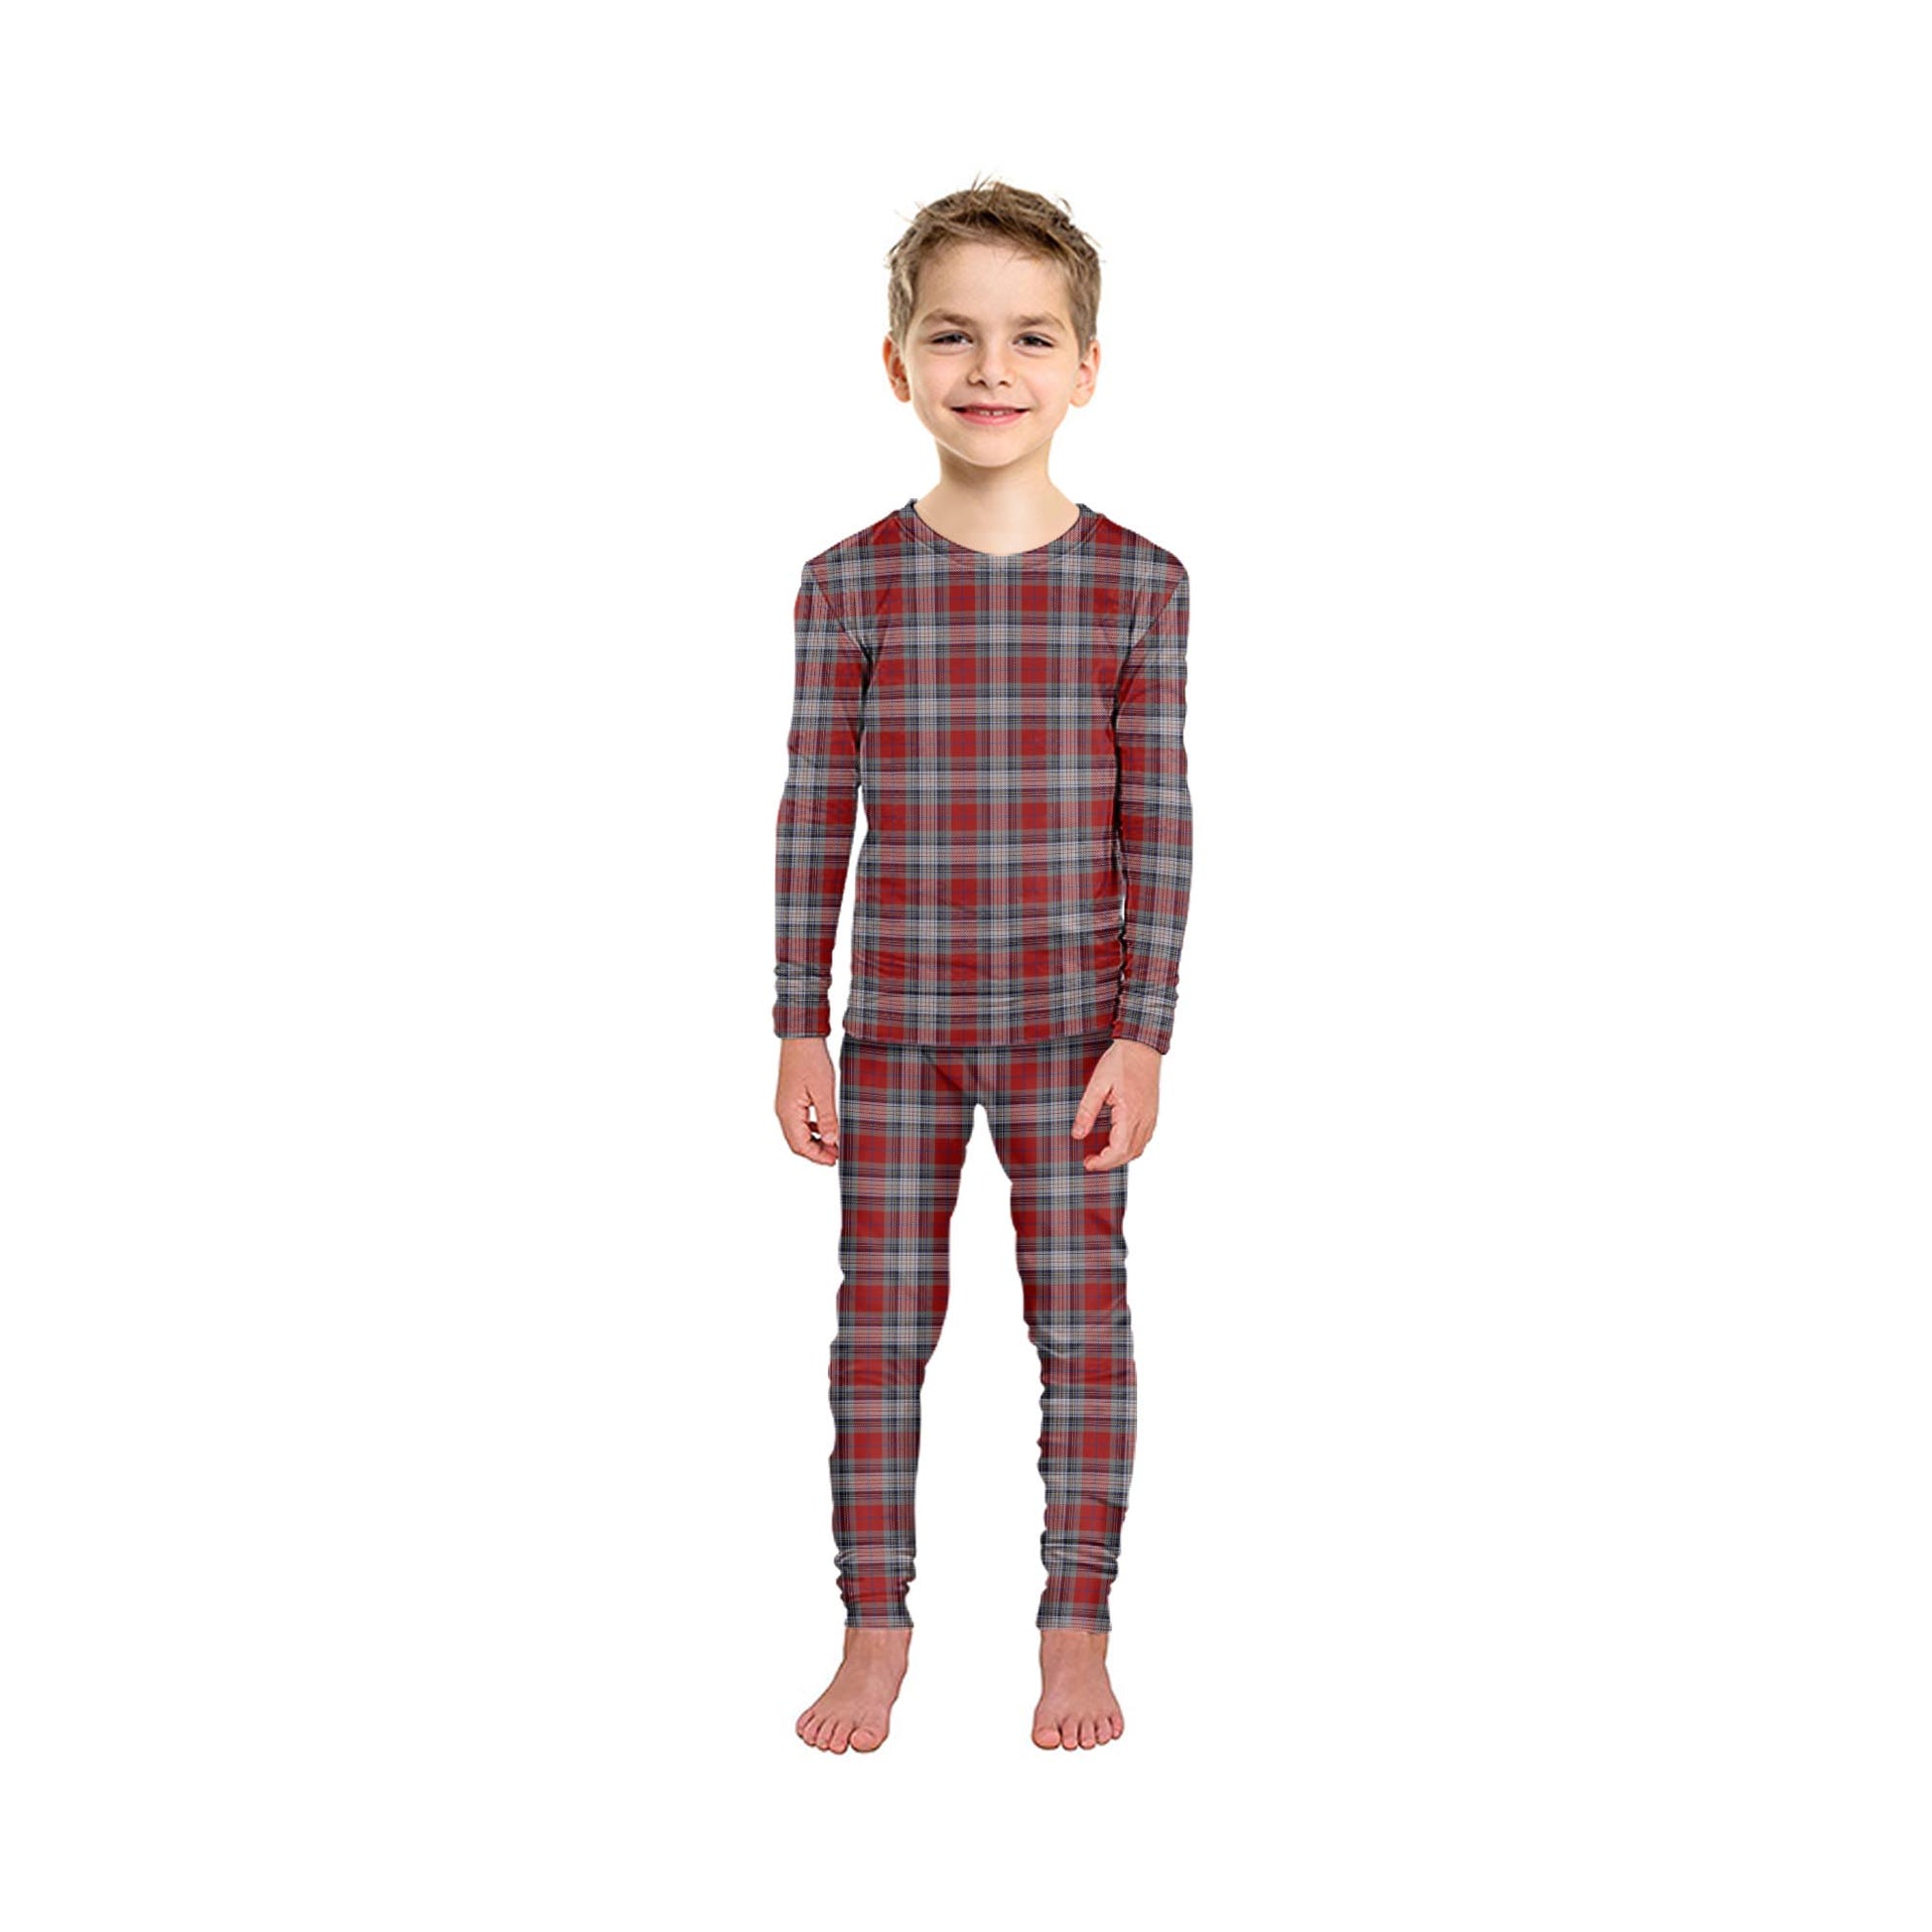 Warden Tartan Pajamas Family Set - Tartanvibesclothing